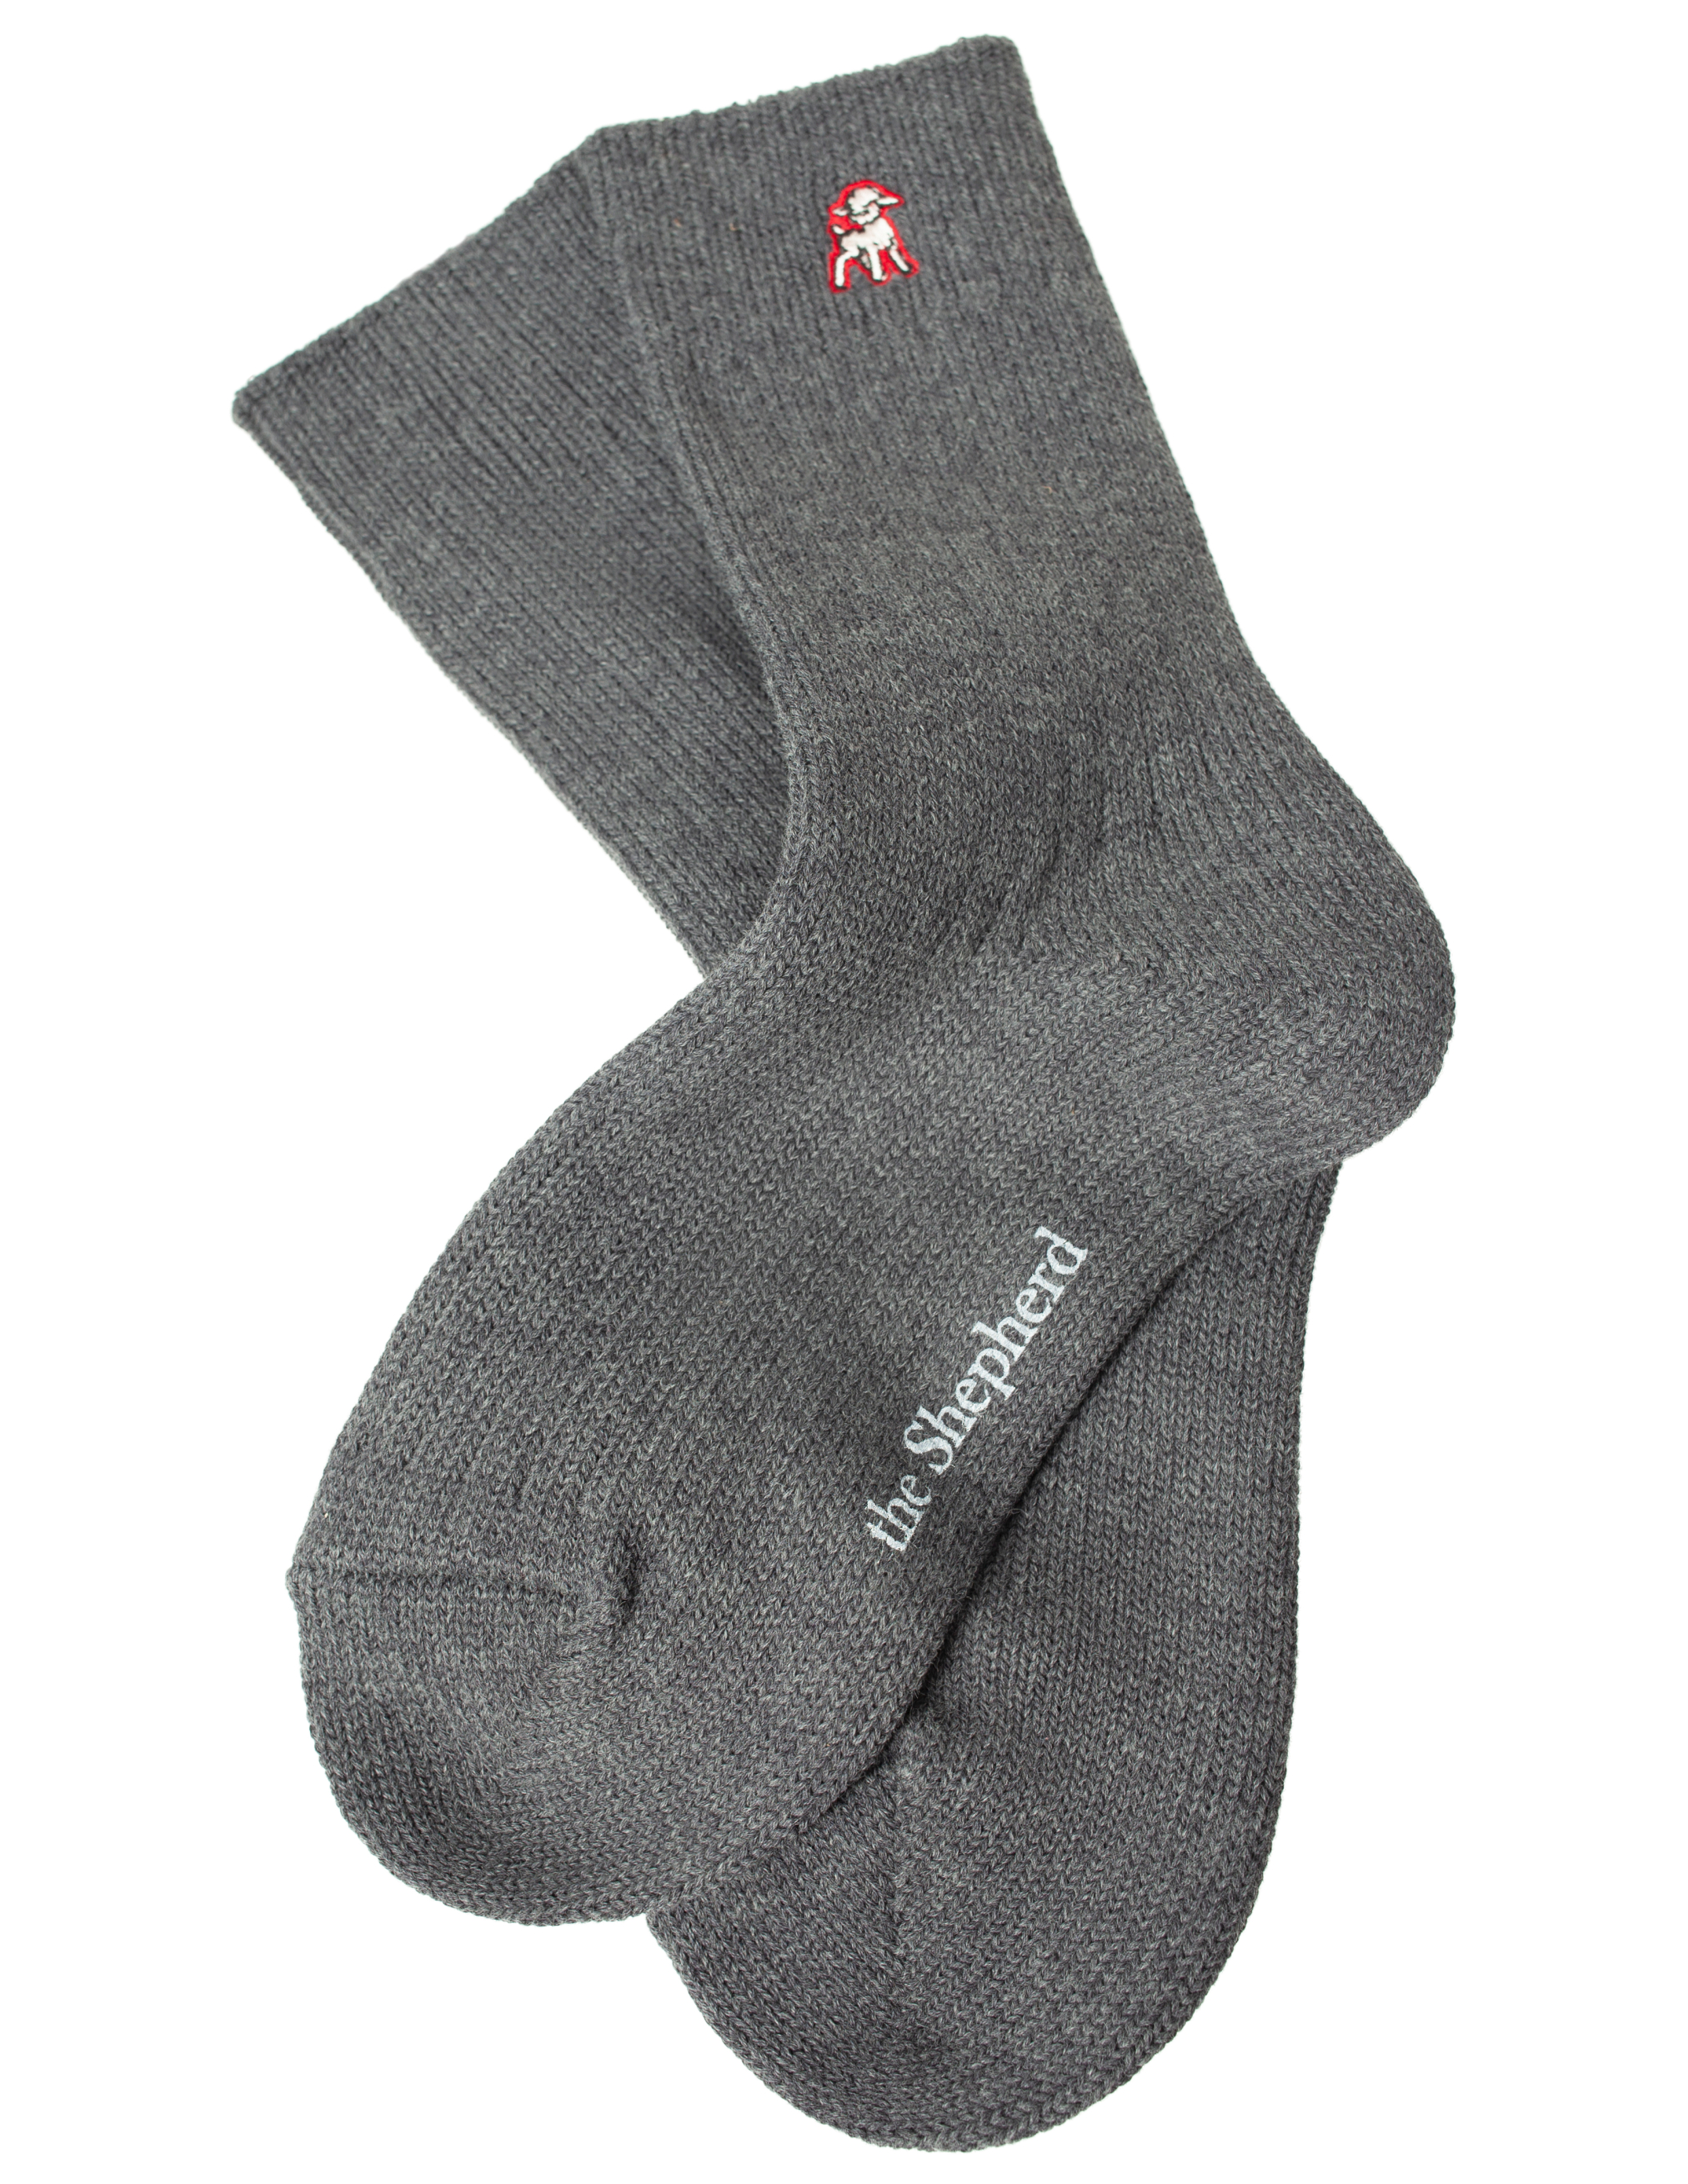 Серые носки с вышивкой Undercover US2B4L01/T.CHARCOAL, размер One Size